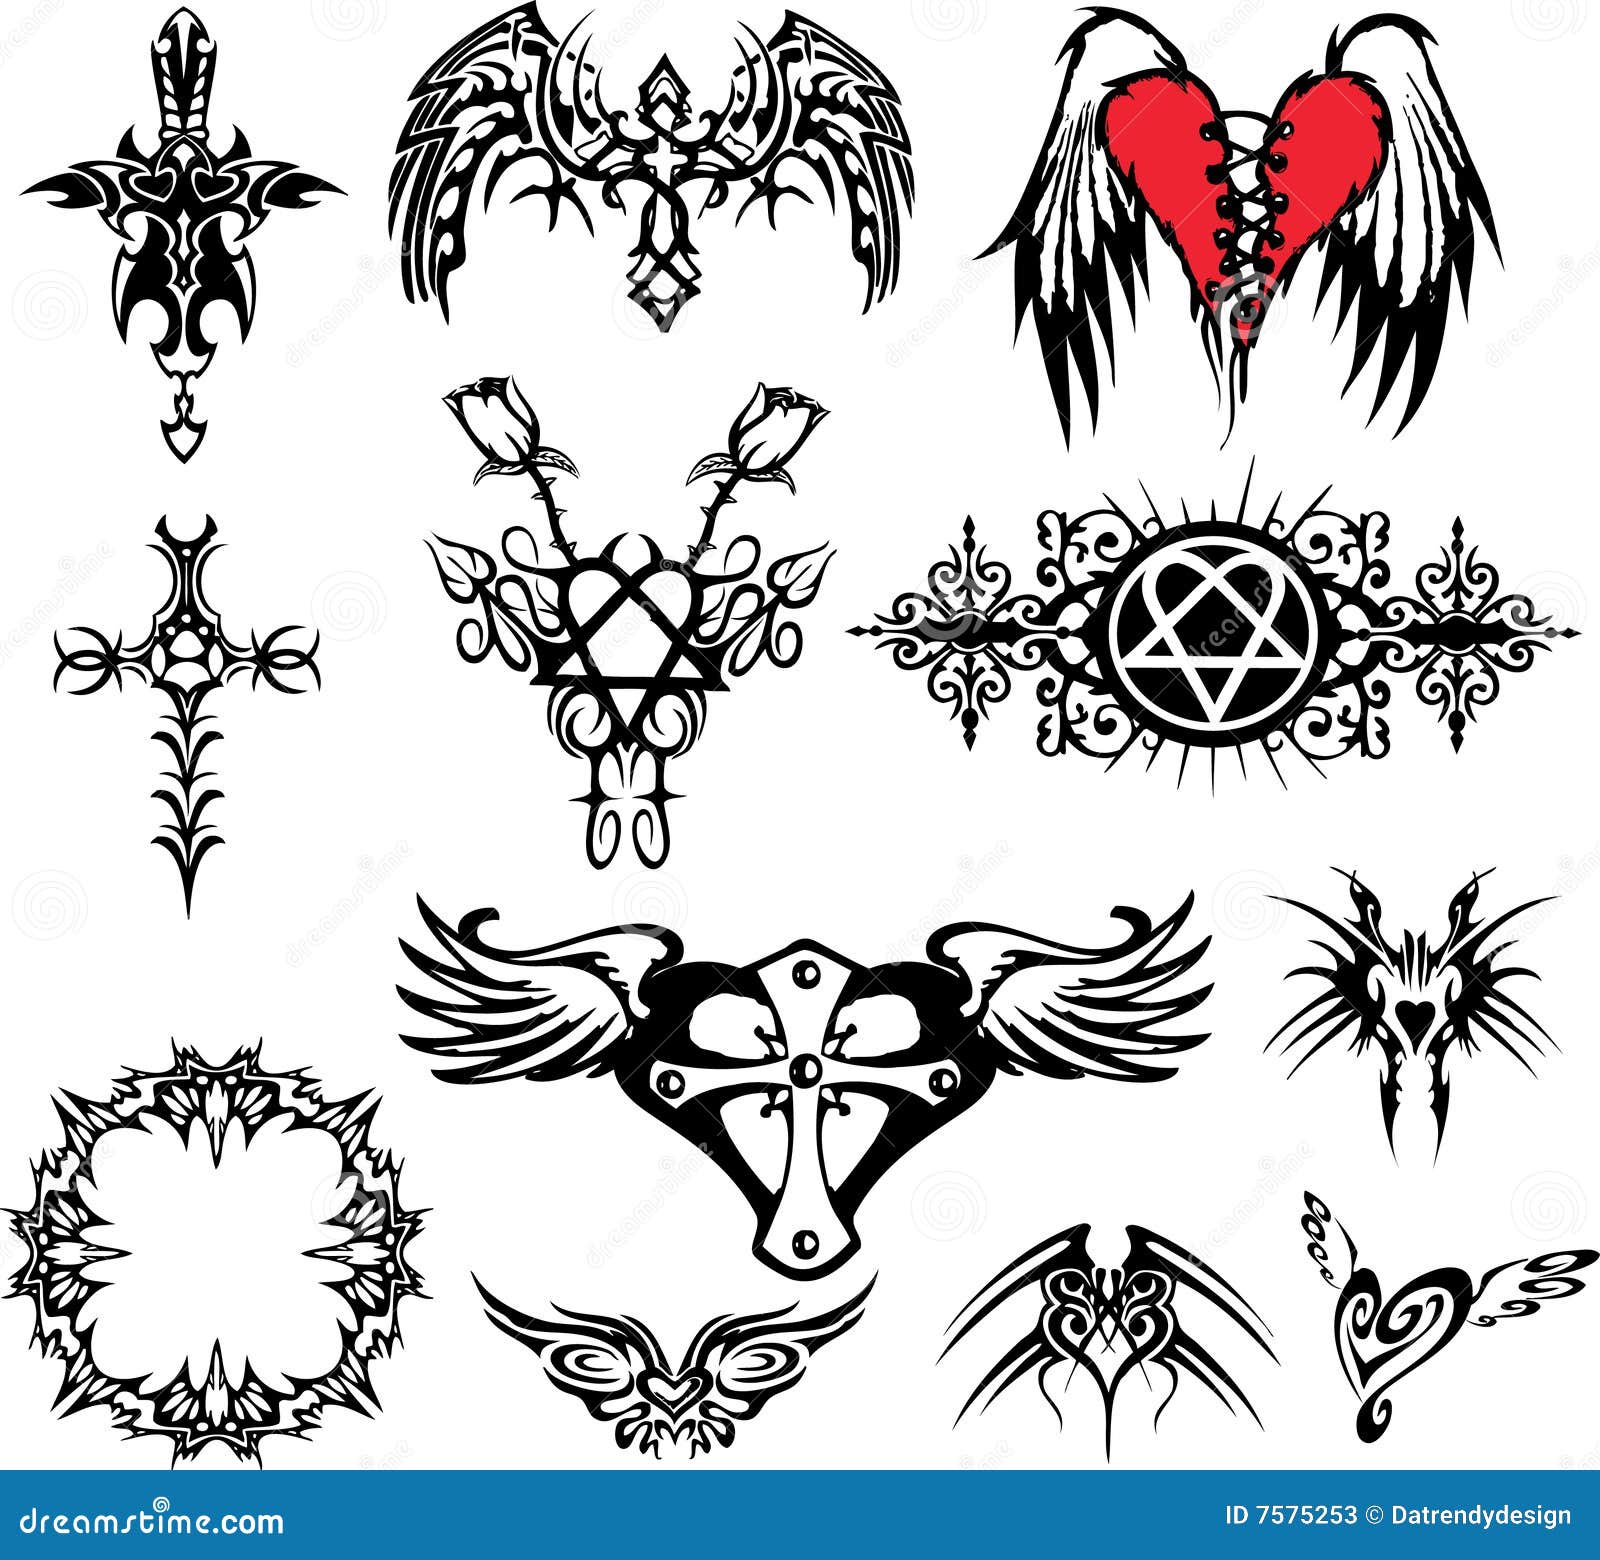 Tattoo gothic stock illustration. Illustration of bird - 7575253